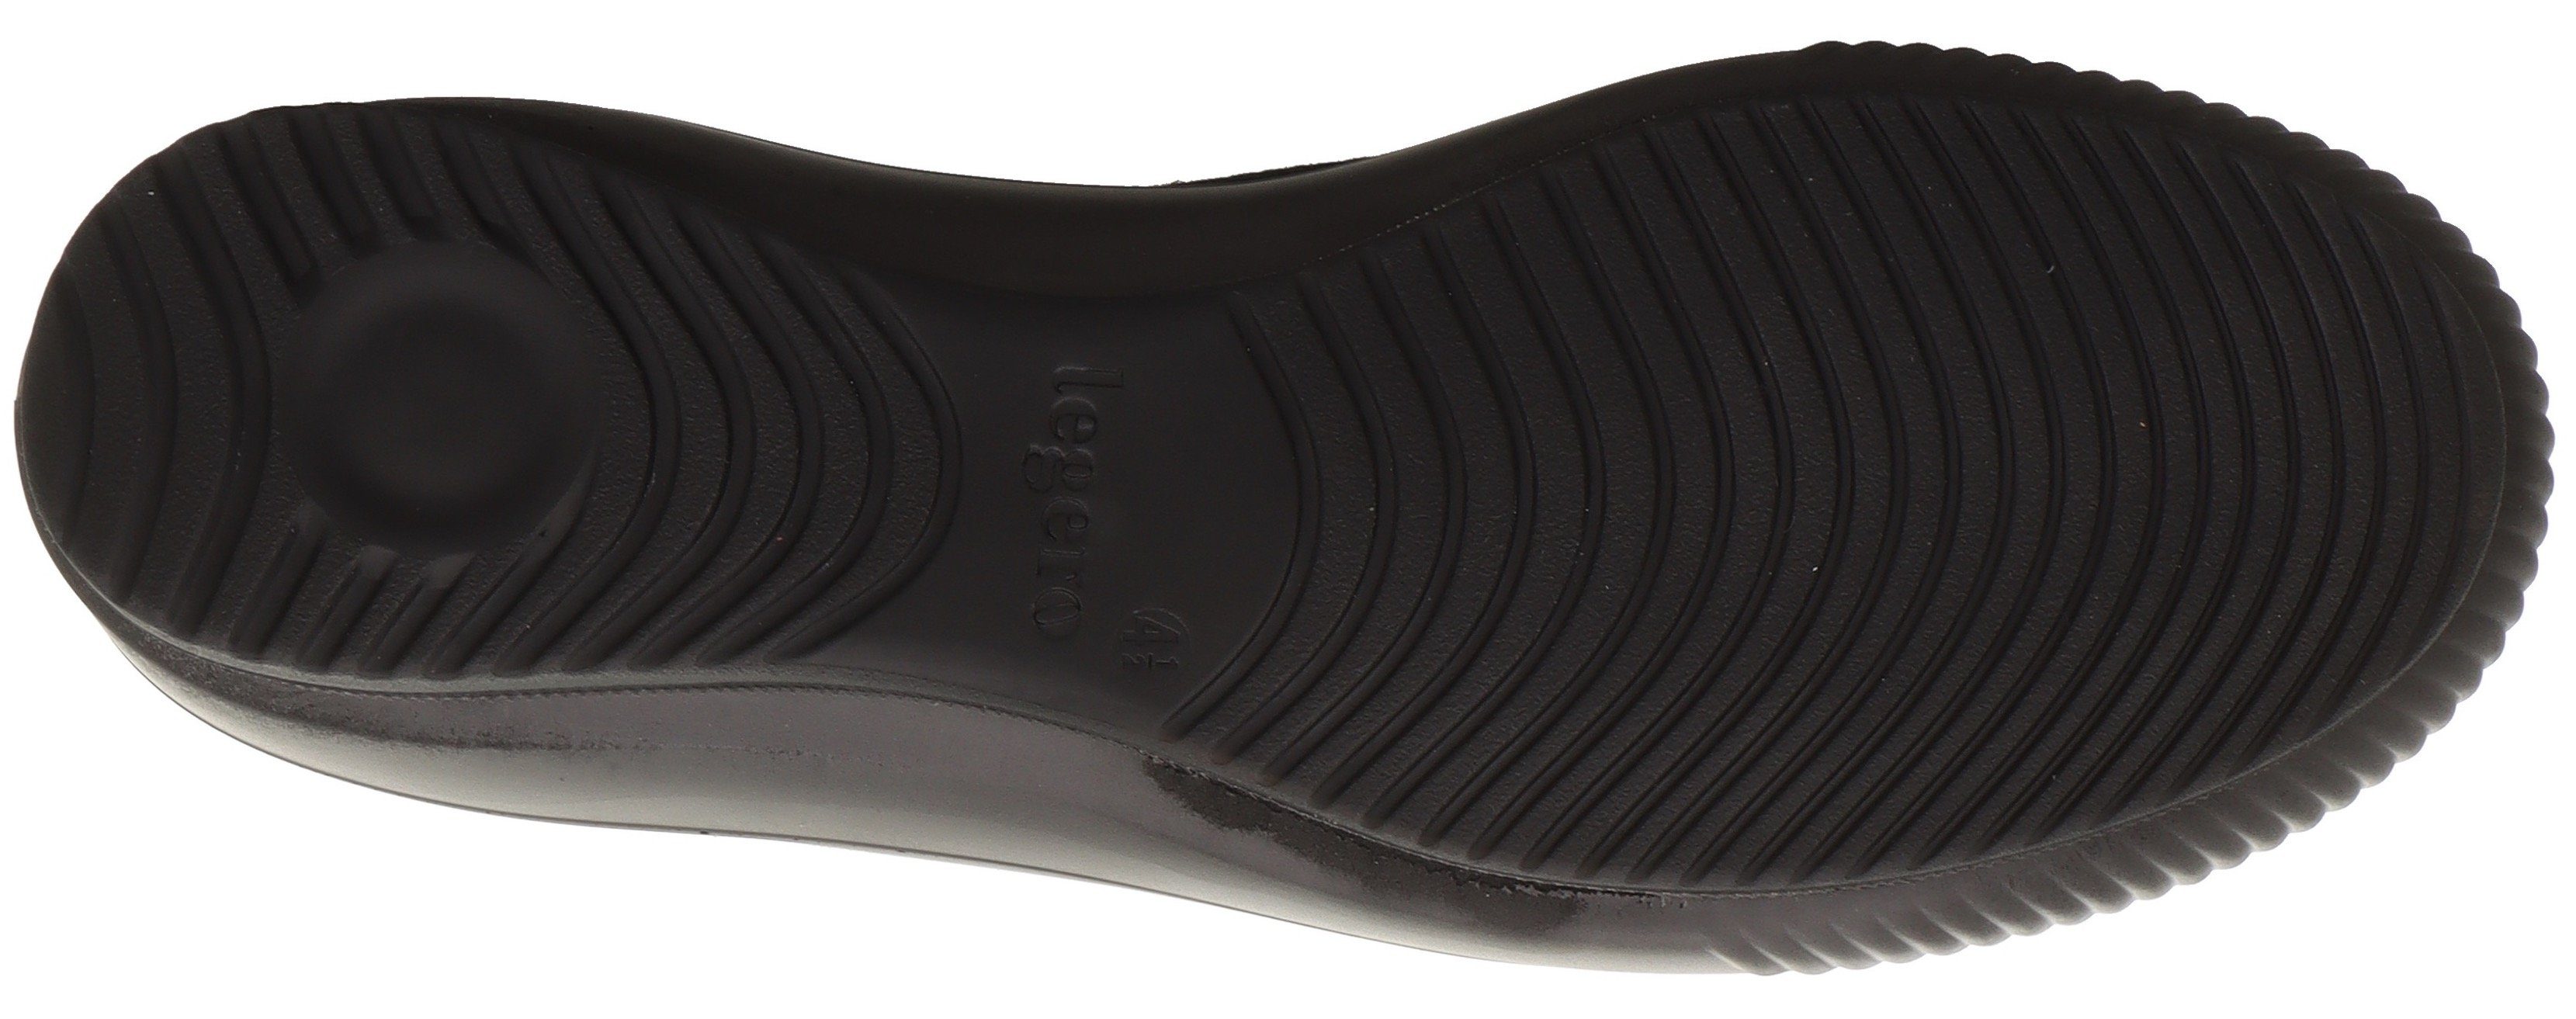 schwarz TANARO Membrane mit Legero wasserdichter 5.0 GORE-TEX® Sneaker